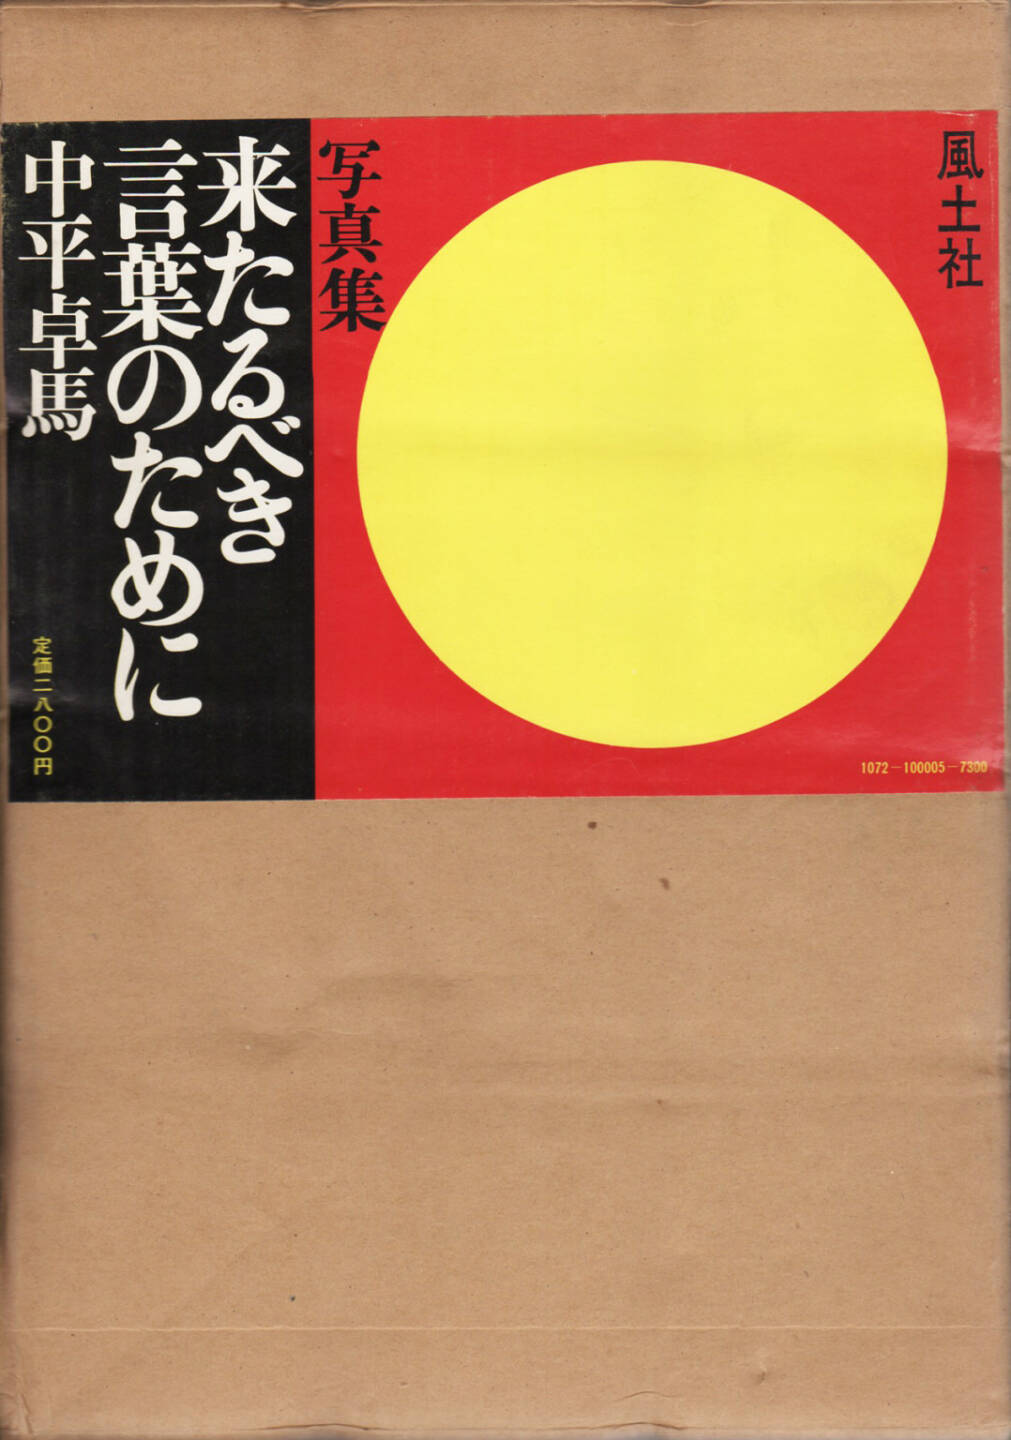 Takuma Nakahira - For a Language to Come (Kitarubeki kotoba no tame ni 中平卓馬 来たるべき言葉のために), Fūdosha 1970, Cover - http://josefchladek.com/book/takuma_nakahira_-_for_a_language_to_come_kitarubeki_kotoba_no_tame_ni_中平卓馬_来たるべき言葉のために